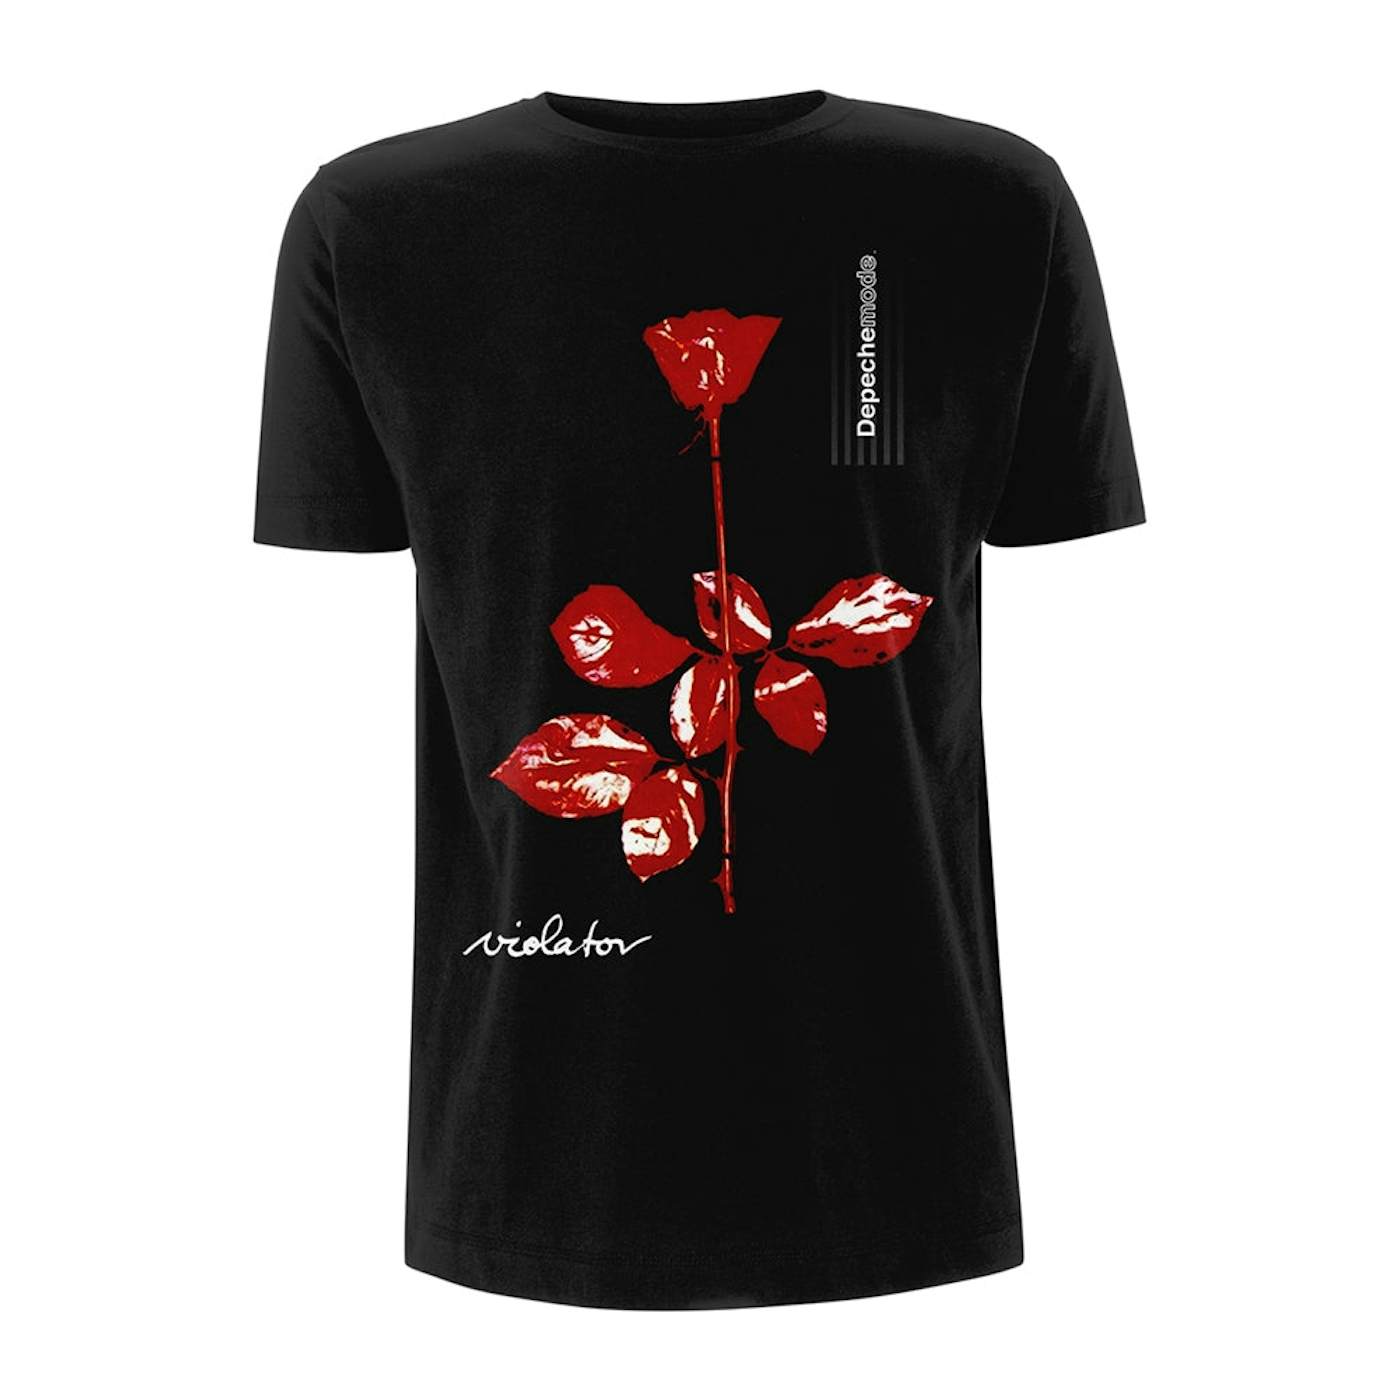 Depeche Mode T Shirt - Violator